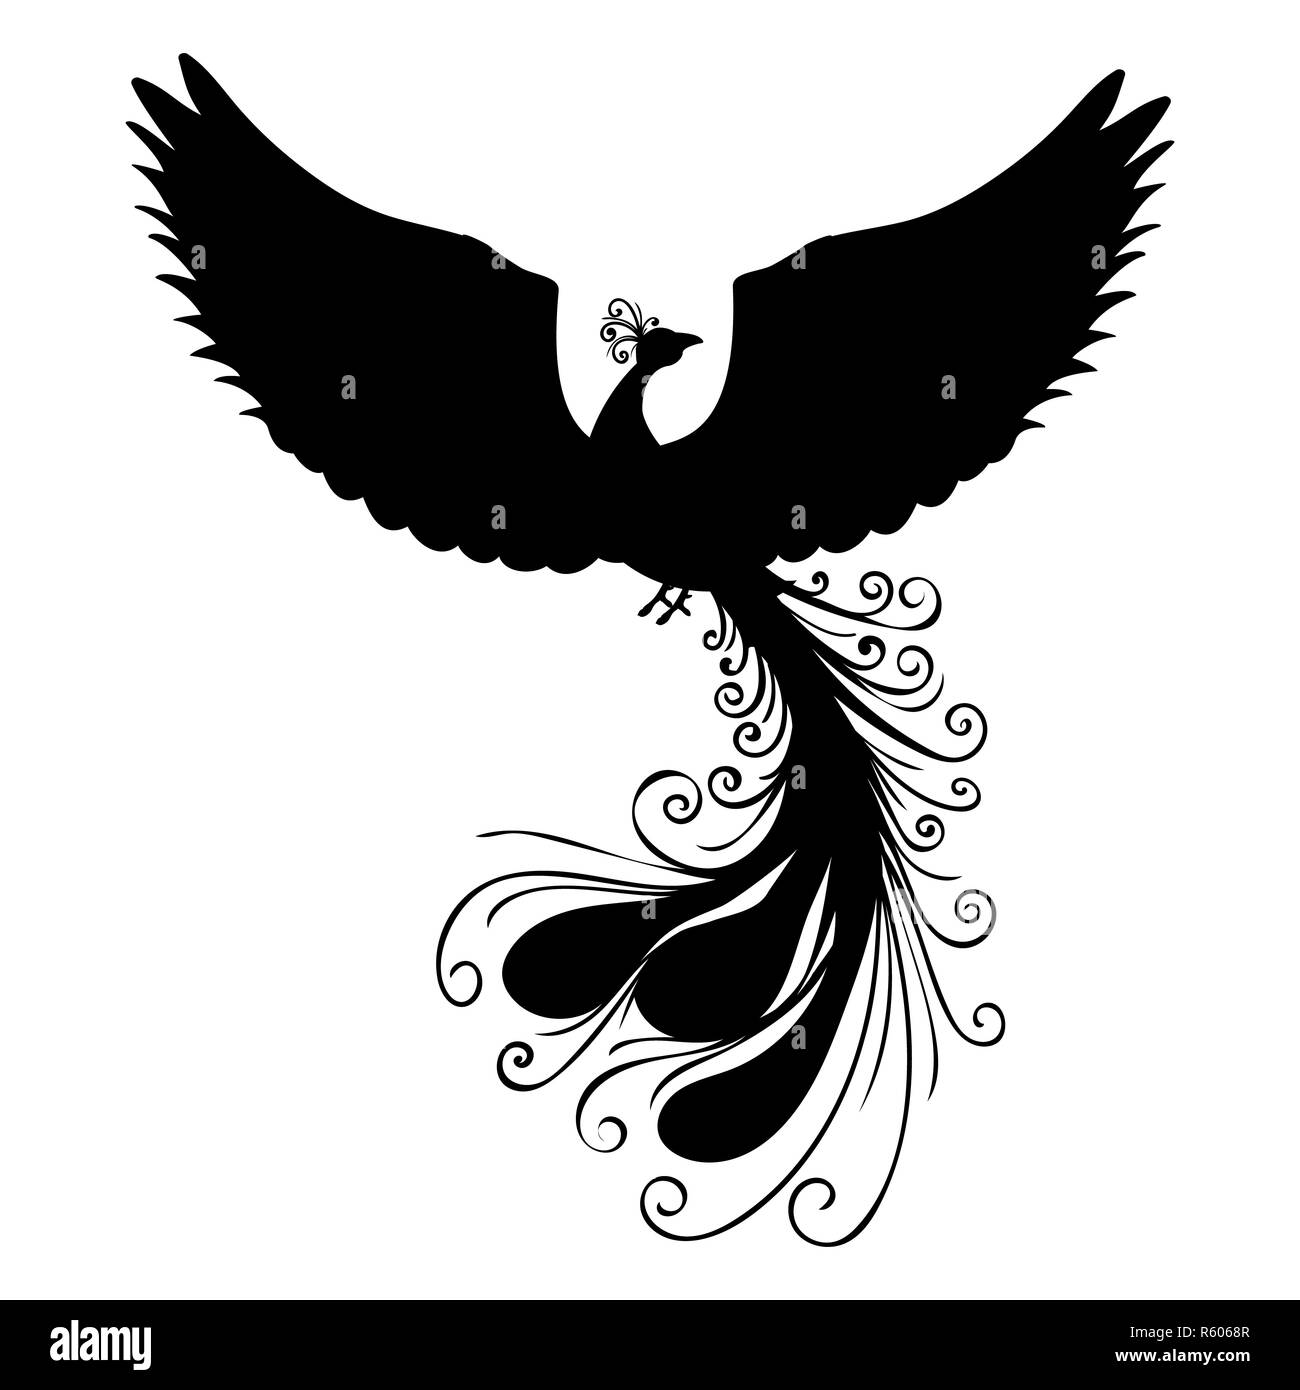 Phoenix vogel Silhouette der antiken Mythologie fantasy Stockfotografie -  Alamy